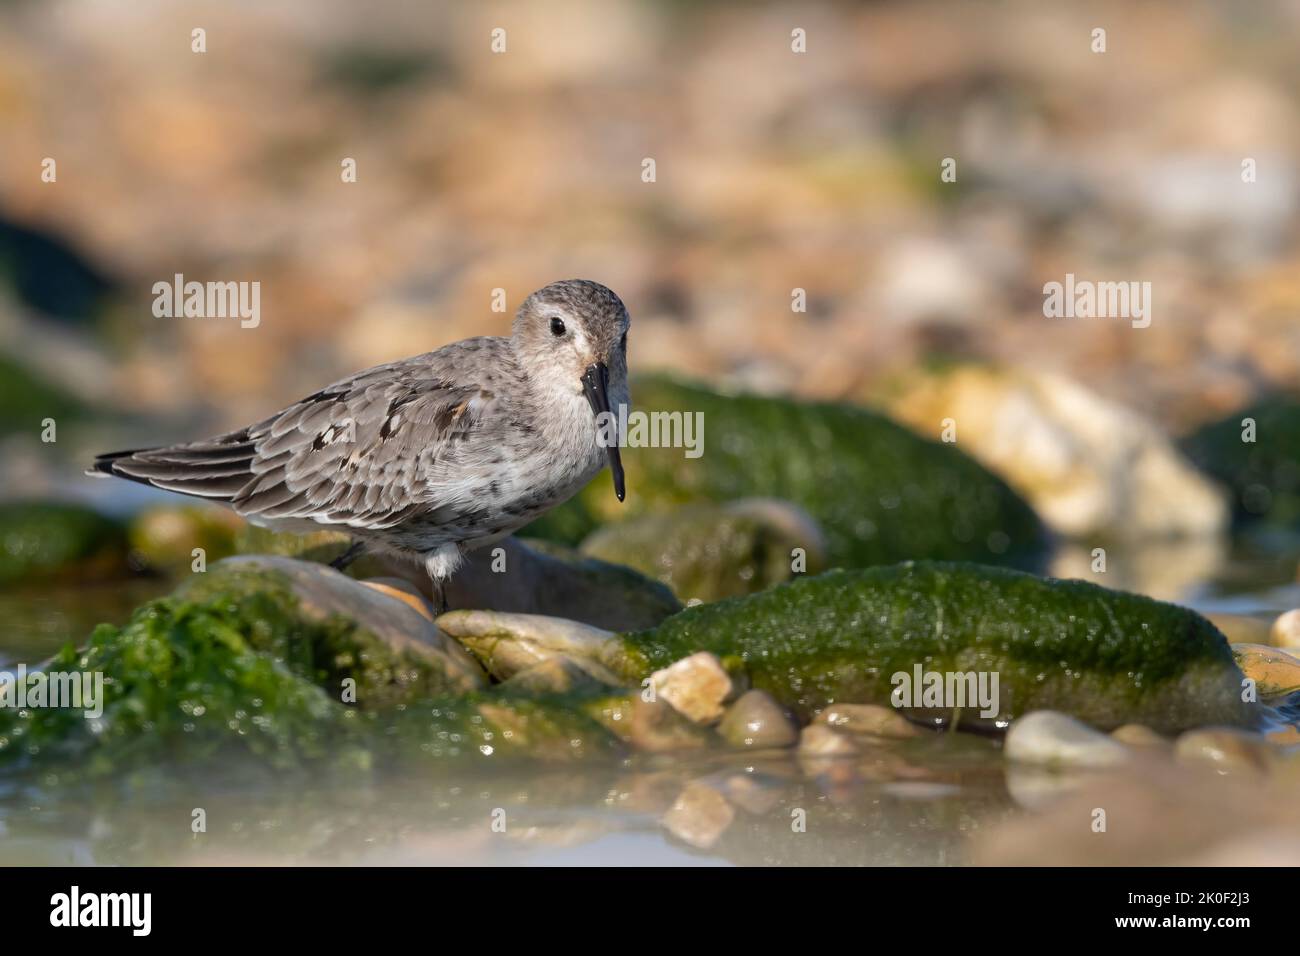 Waders o uccelli marini, dunlin in una zona umida. Foto Stock